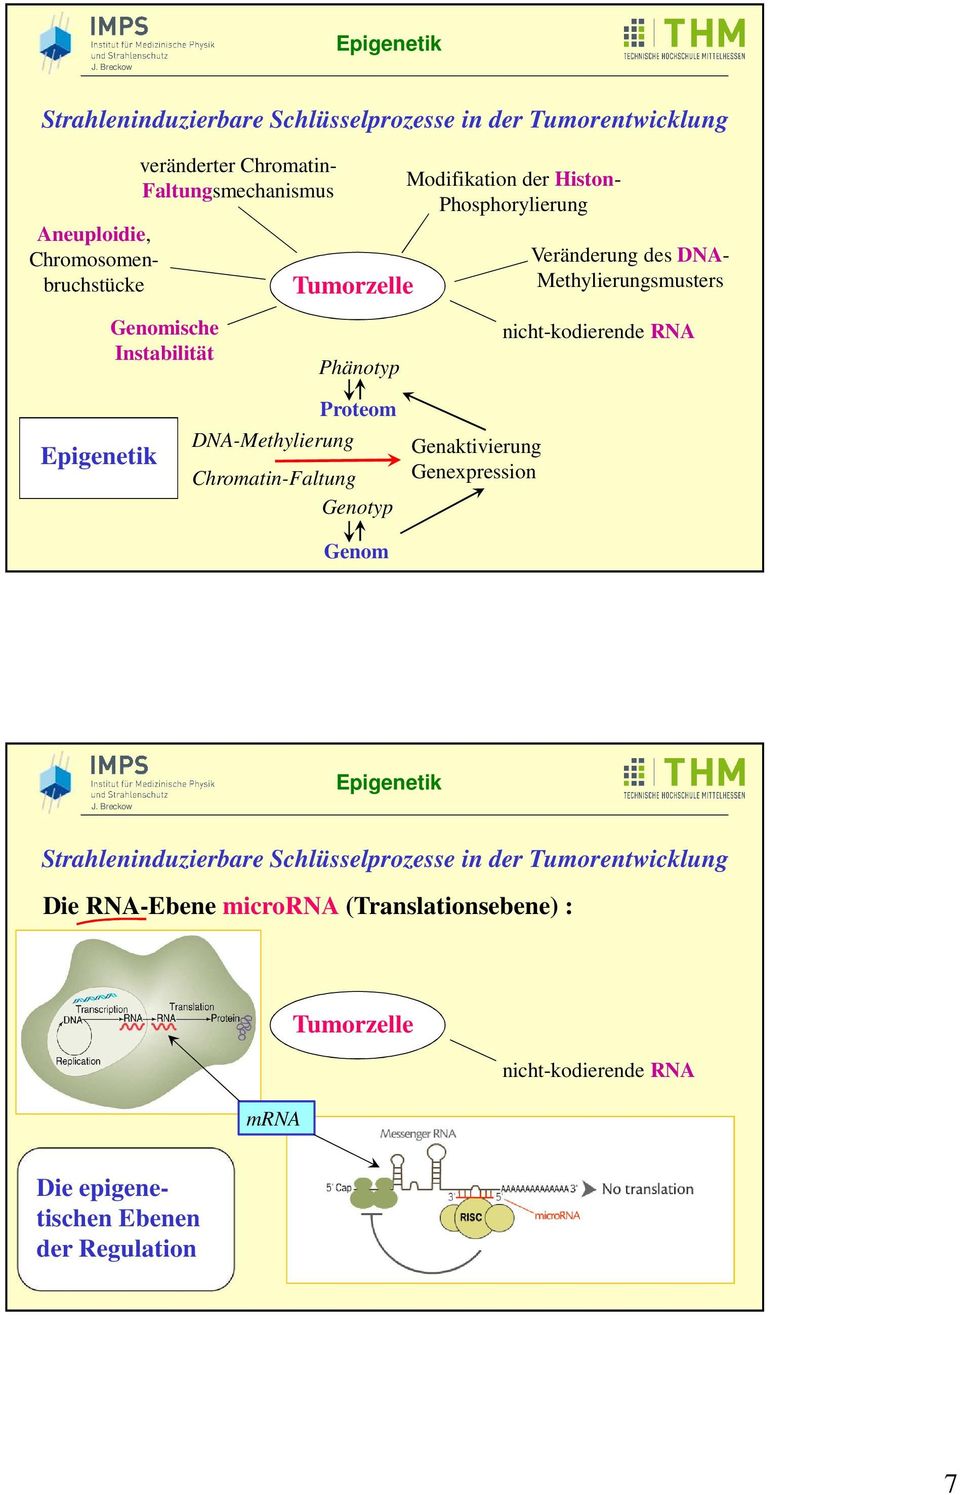 Methylierungsmusters nicht-kodierende RN Proteom DN-Methylierung hromatin-faltung enotyp enom enaktivierung enexpression